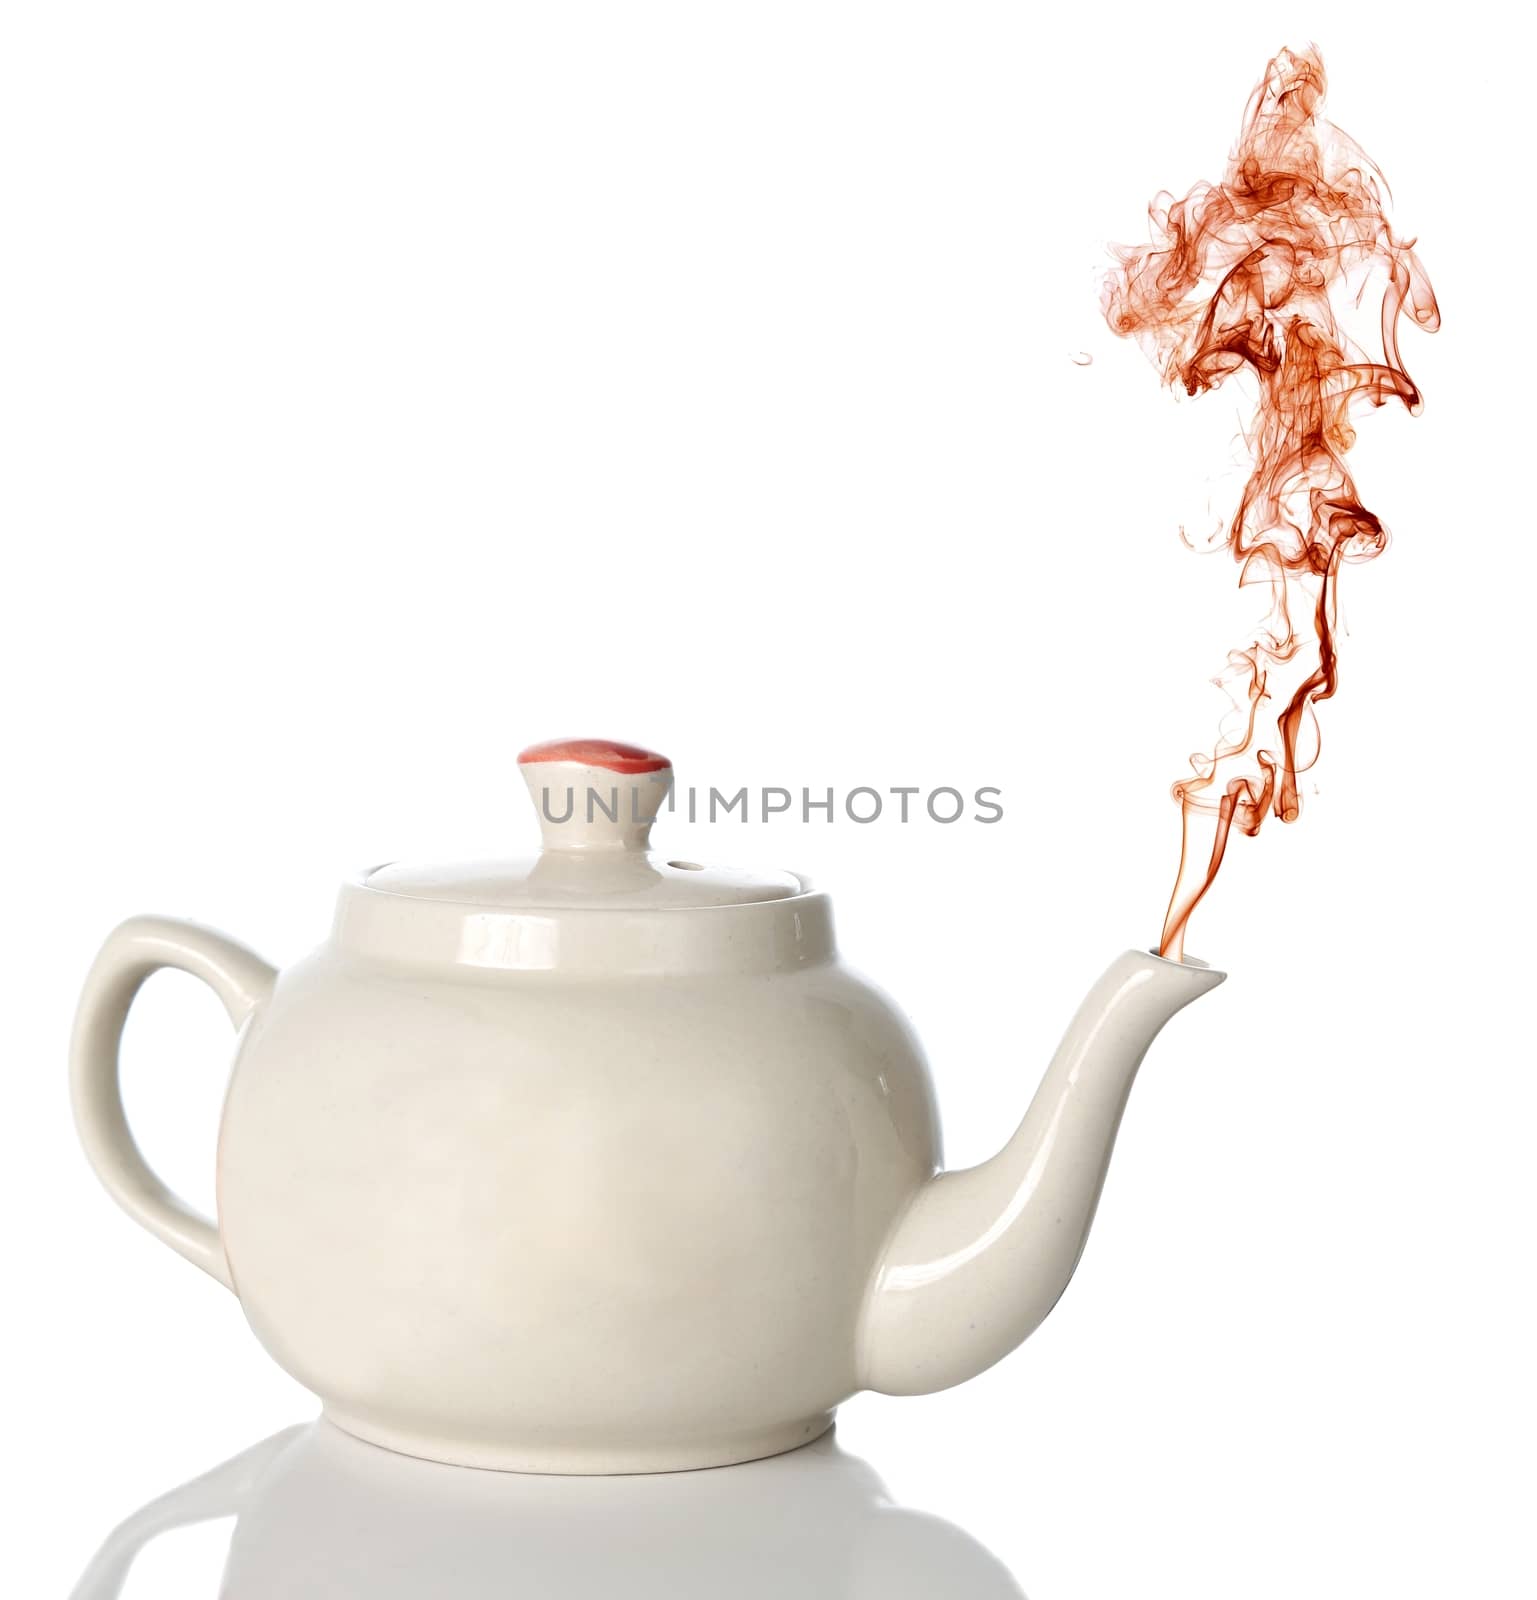 Tea Pot and Steam by fouroaks